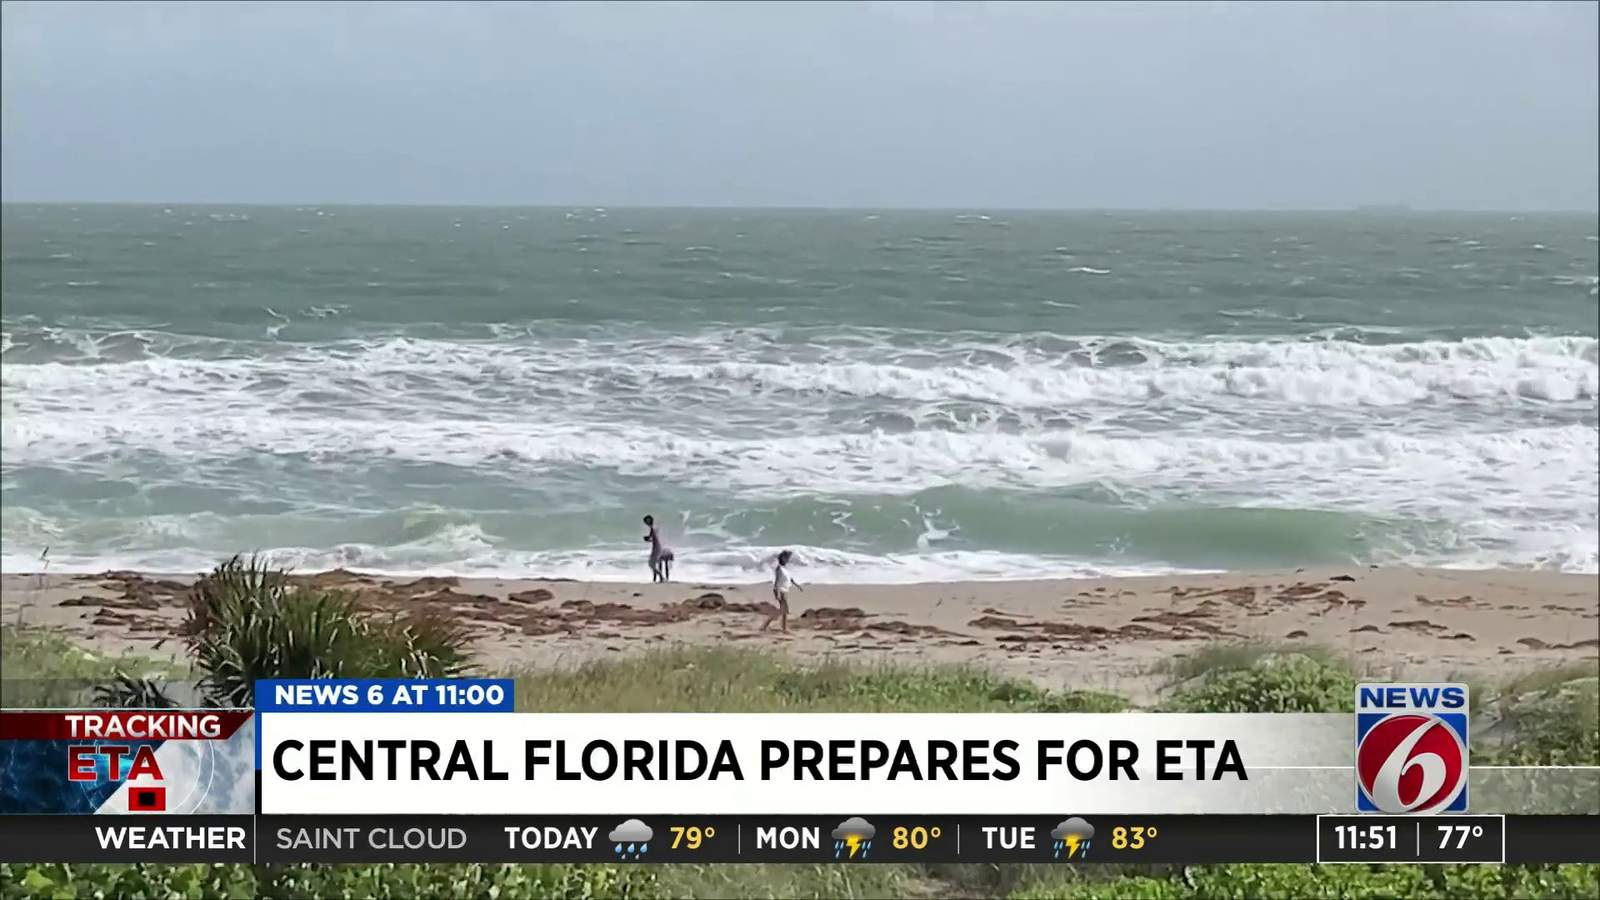 Tropical storm ETA is churning waves along the Florida coast